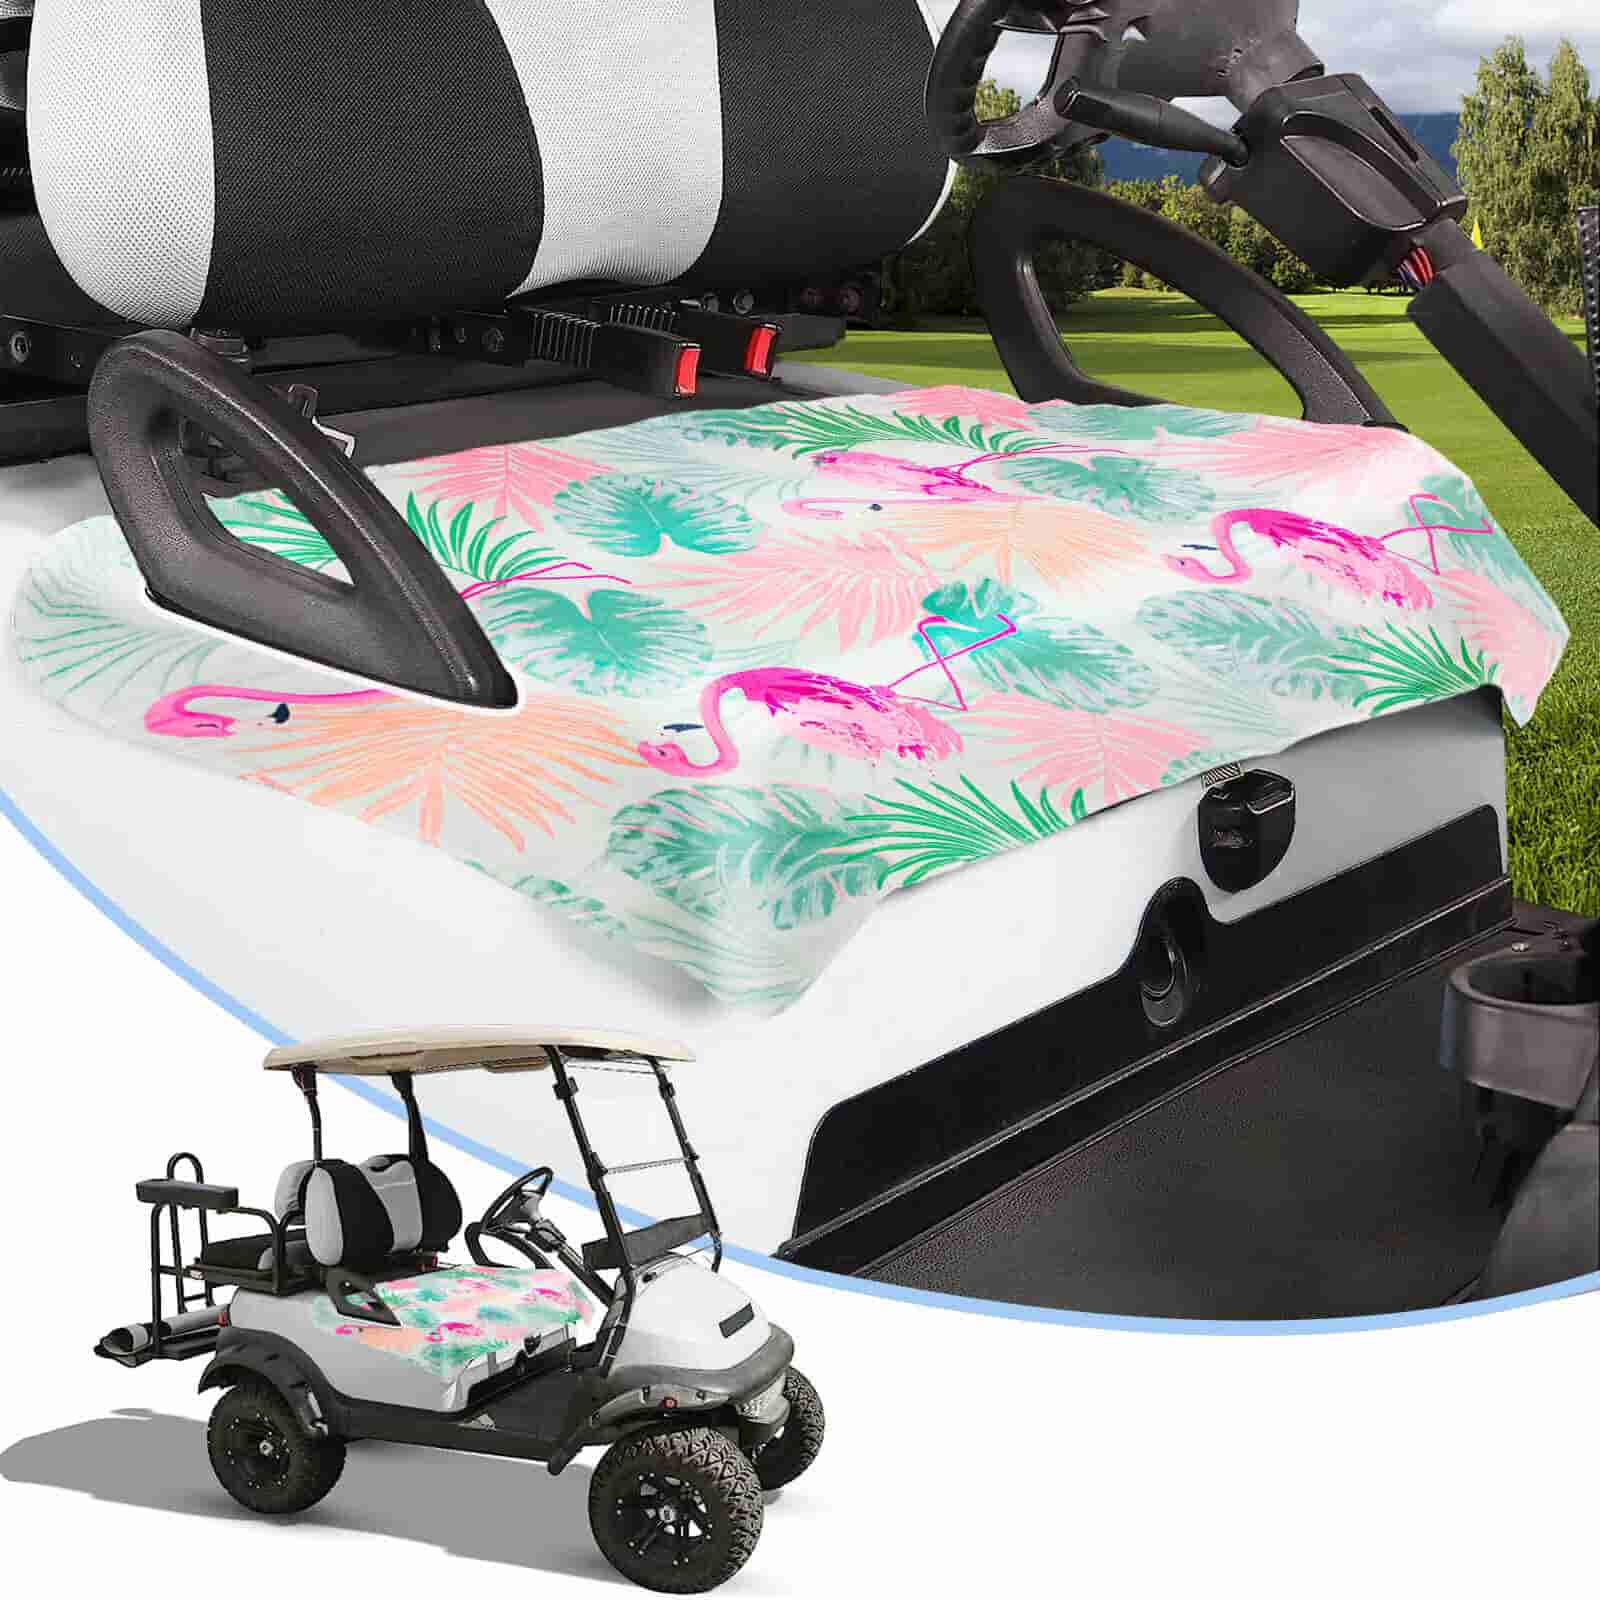 Zenicham Golf Cart Seat Covers, Microfiber Golf Cart Seat Towel/Blanket Covers Universal Fit for EZGO, Club Car, Yamaha, Golf Cart Accessories for Men